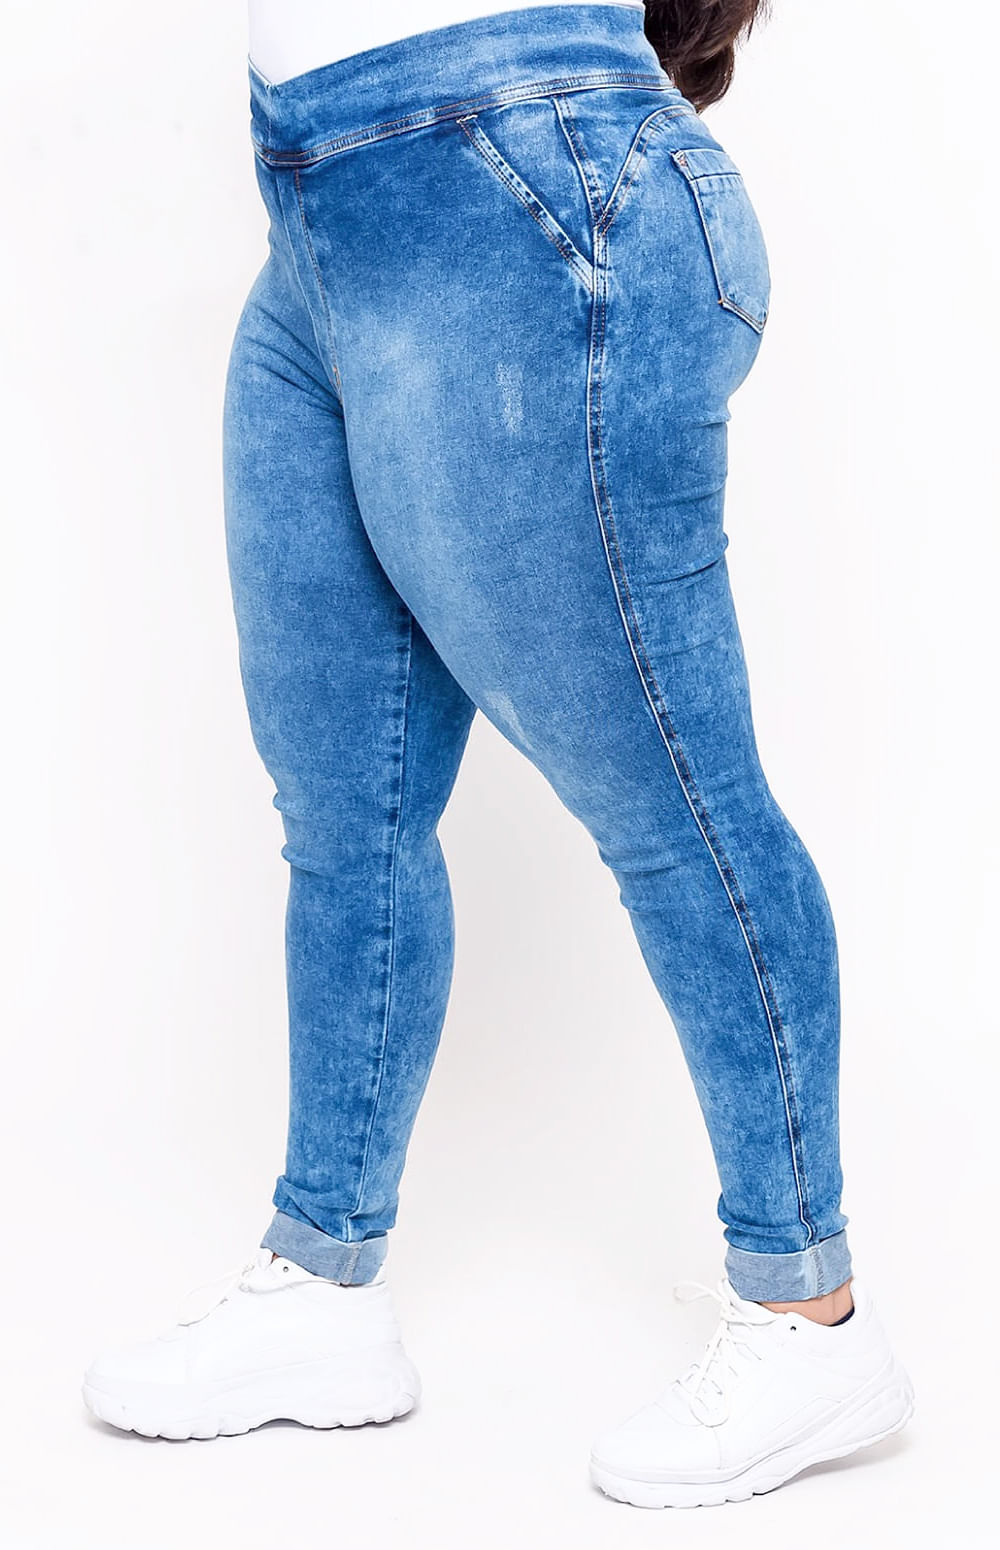 Calça Jeans Plus Size - Extreme Power Comfy Safira